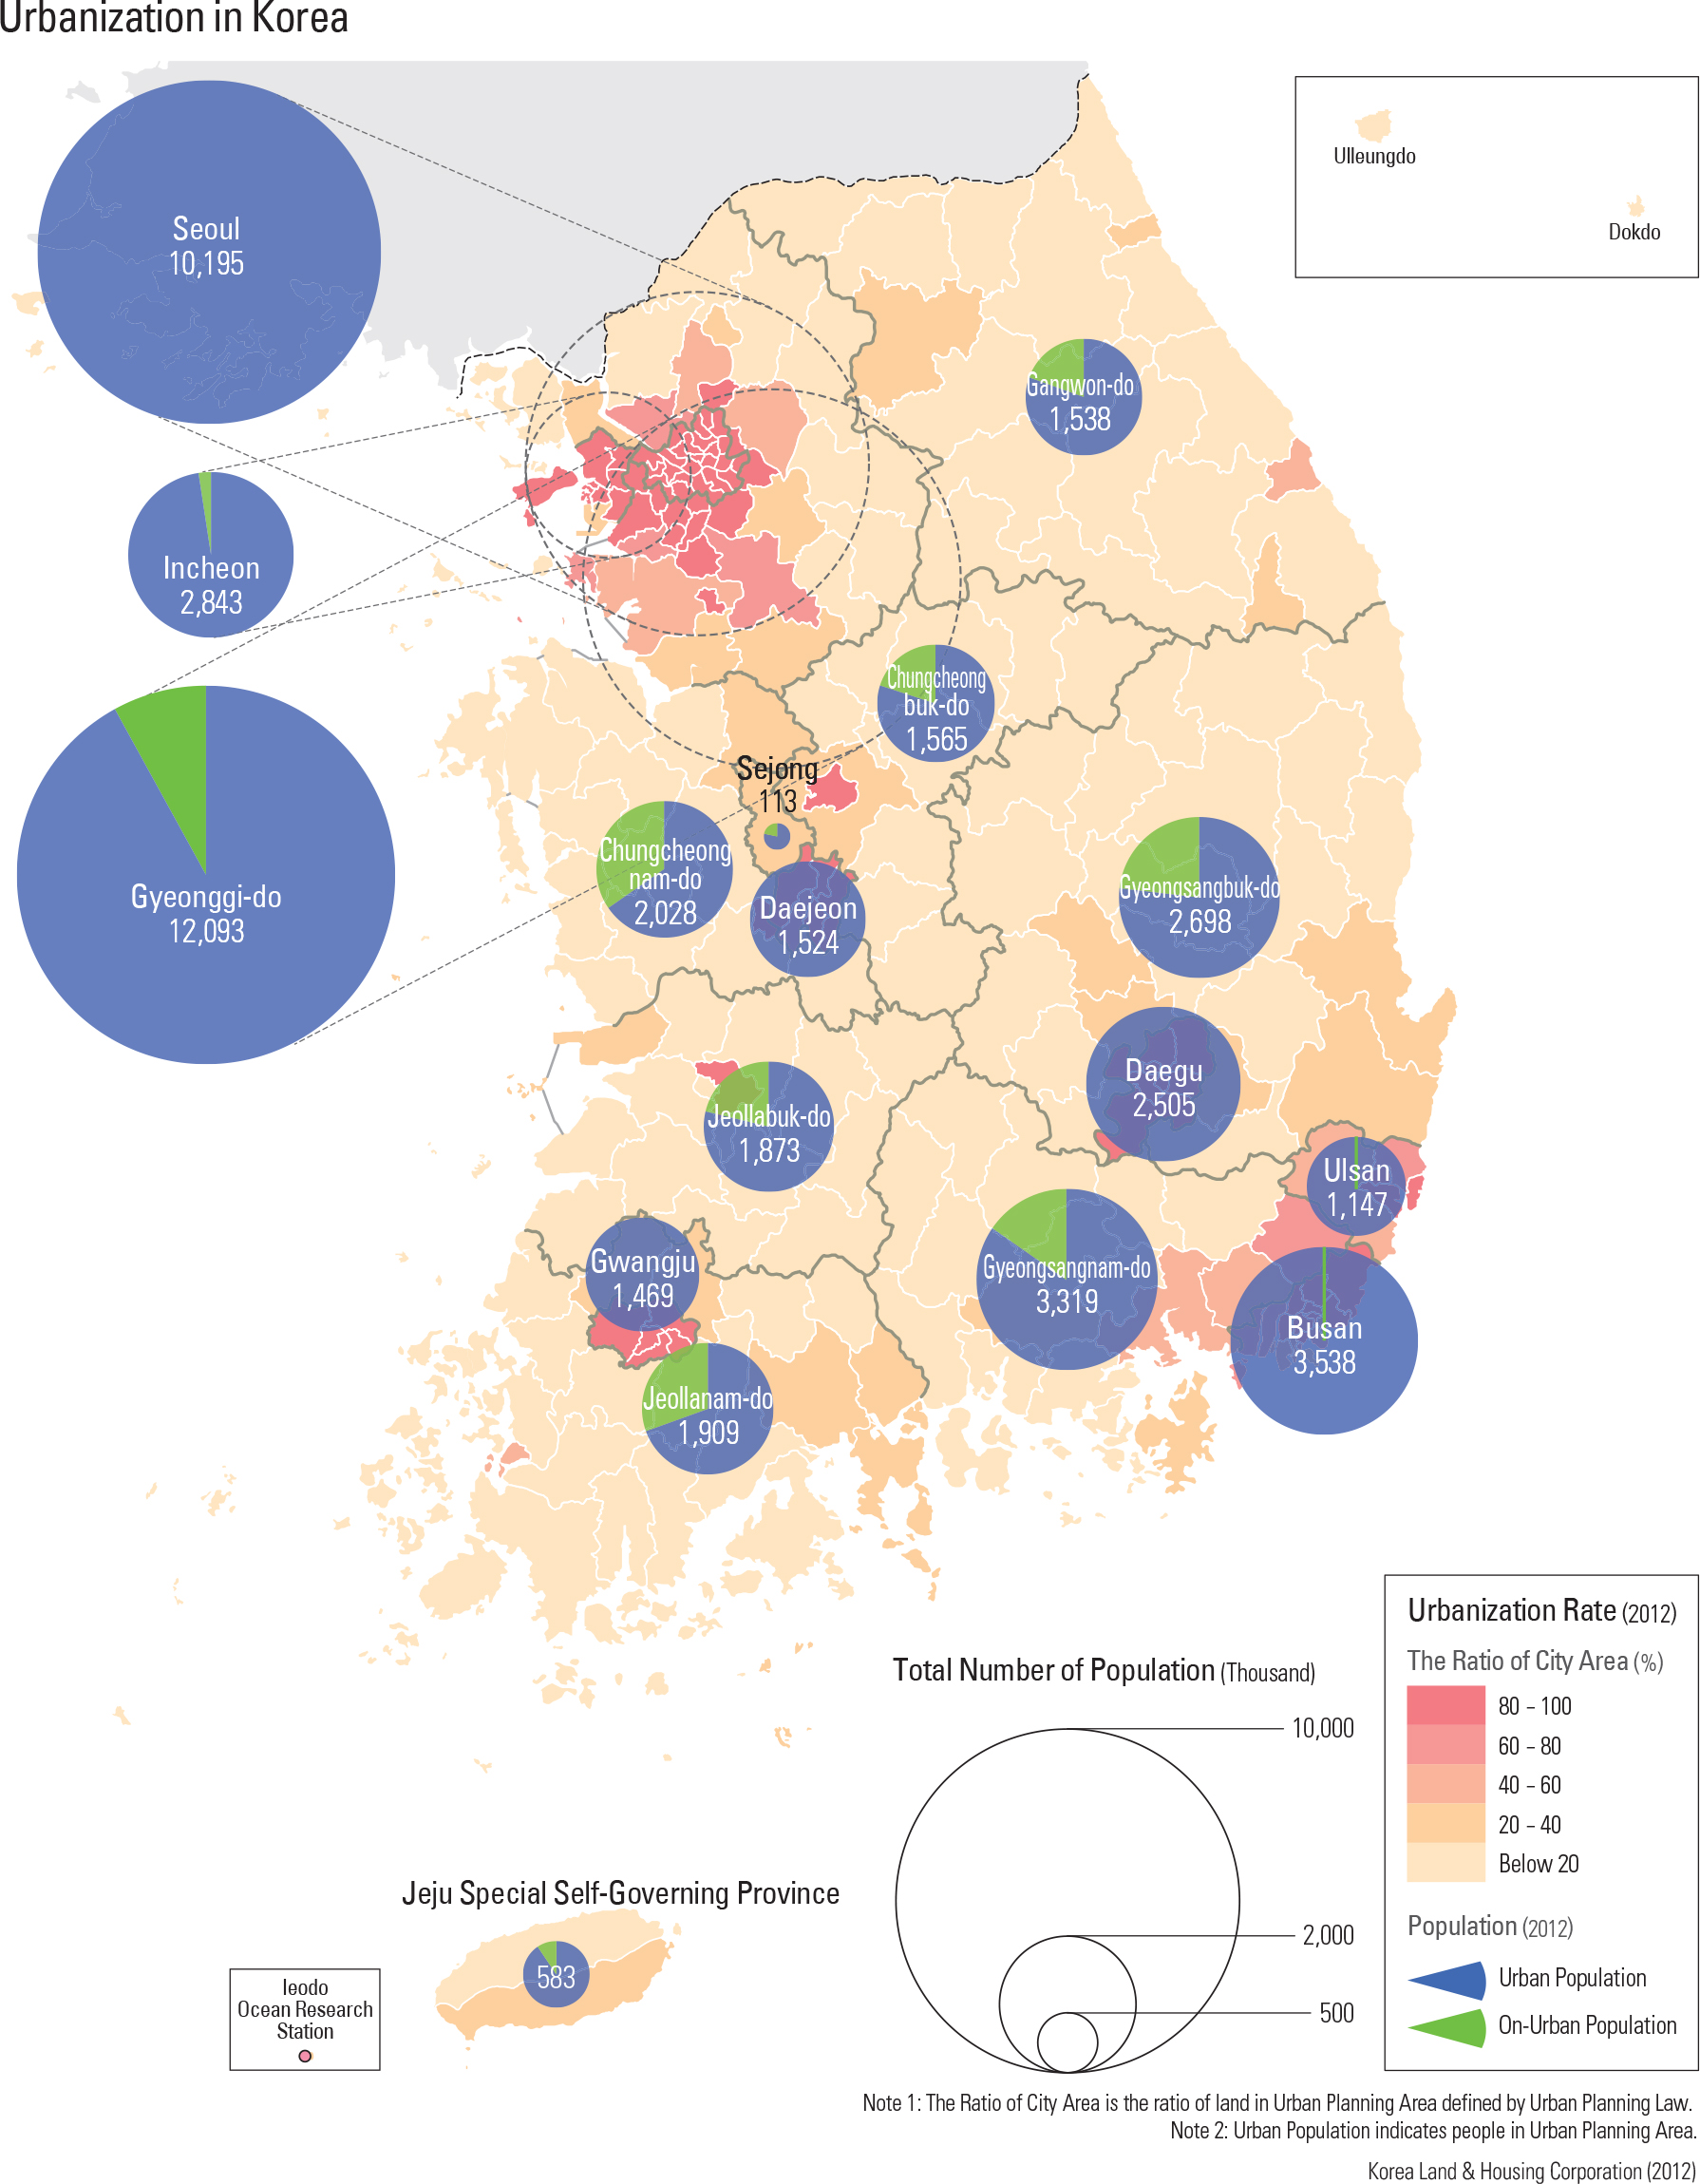 Urbanization in Korea